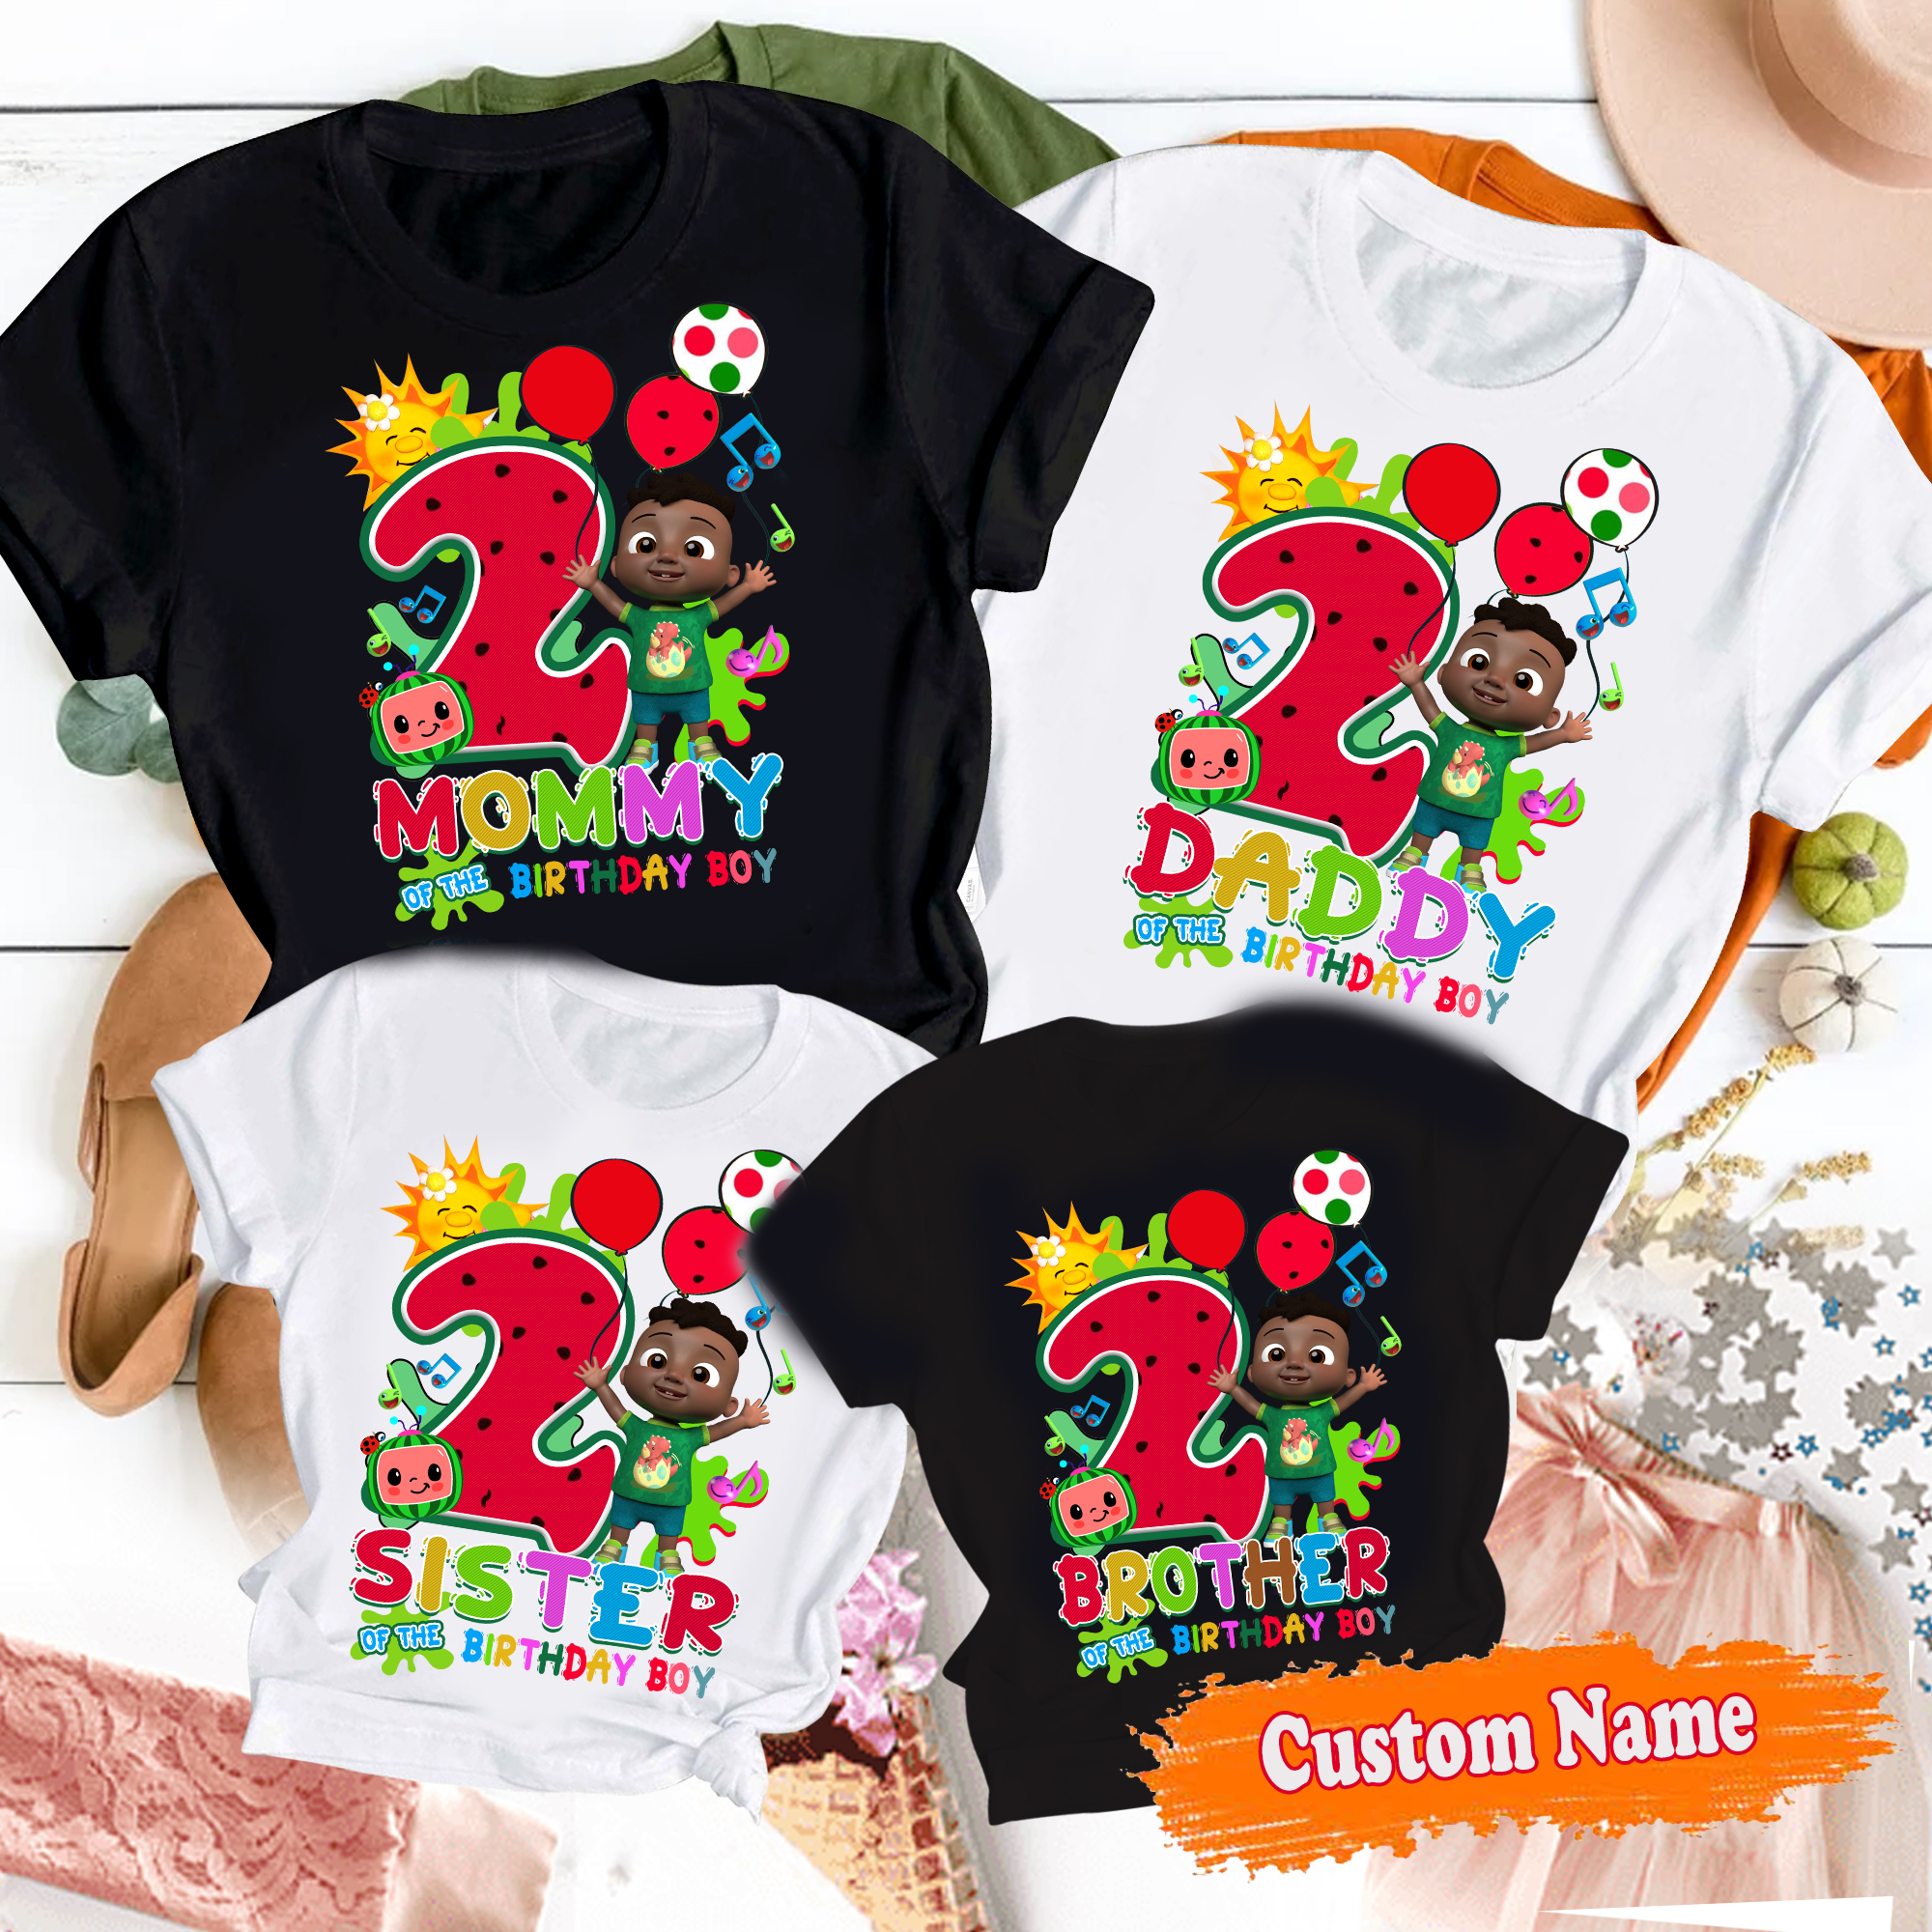 Cody Cocomelon birthday theme shirts  customized Cocomelon Birthday shirts  Family matching Shirts